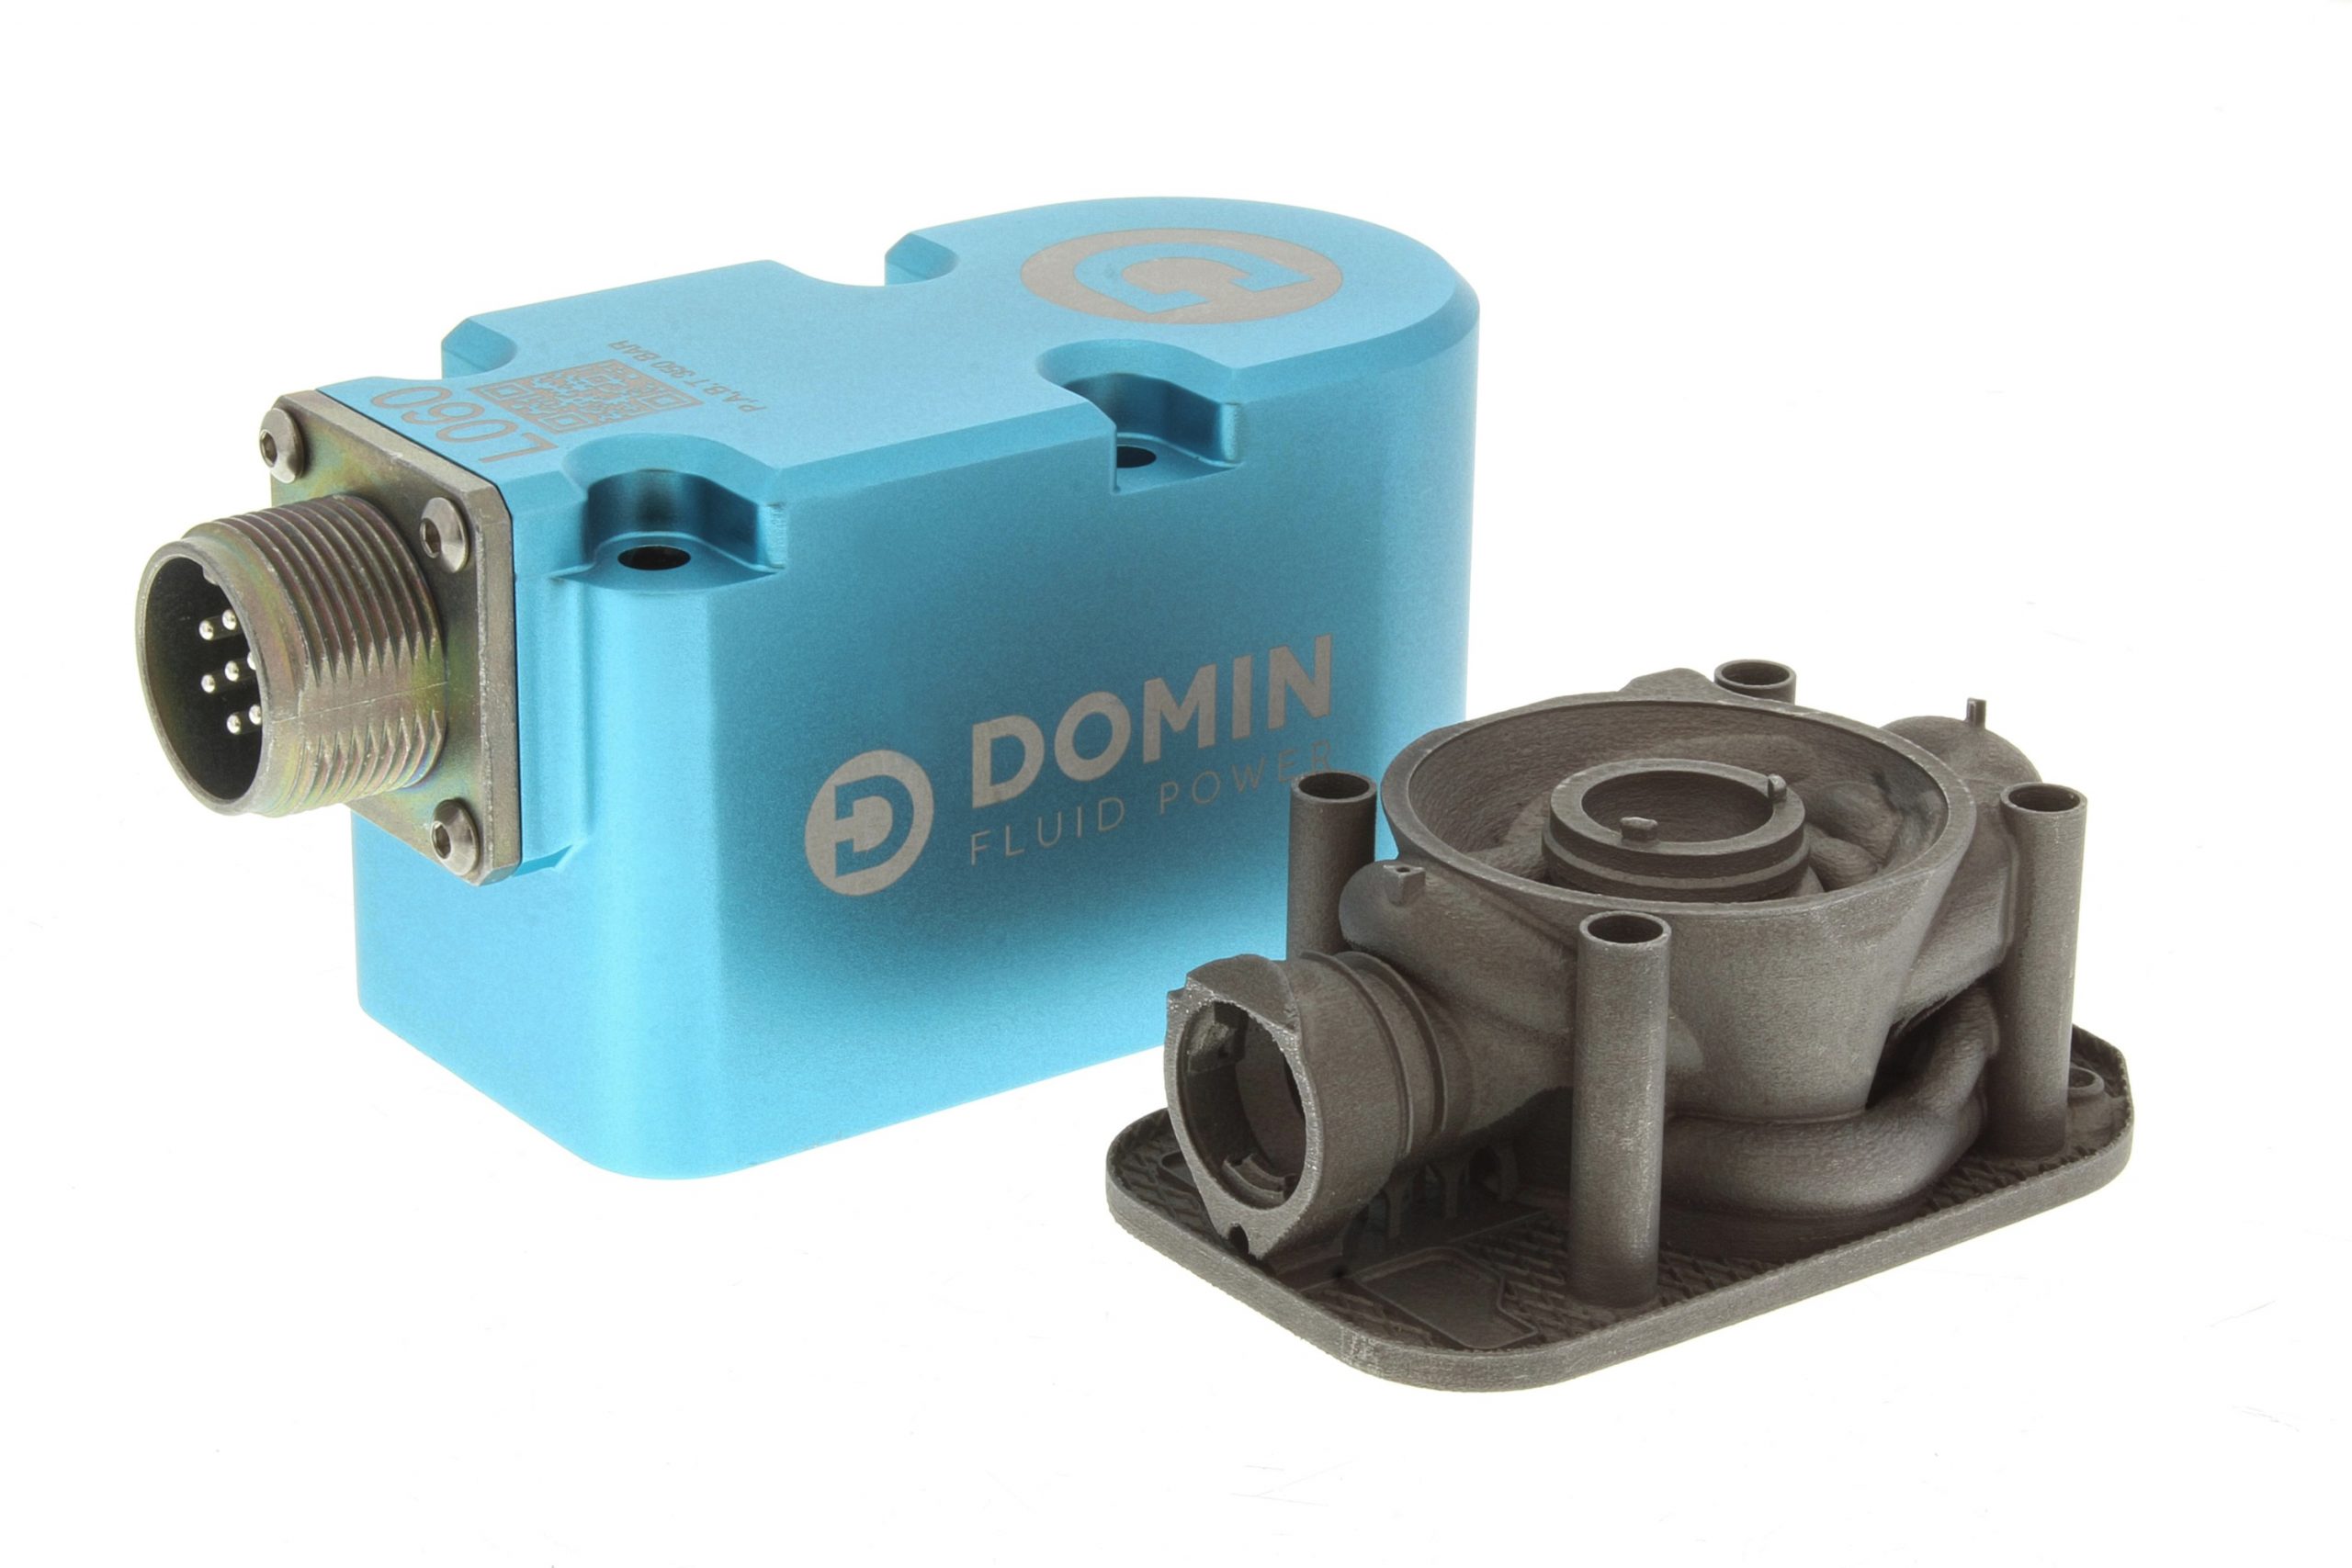 Domin's 3D printed ultra compact direct drive servo valves. Photo via Renishaw.